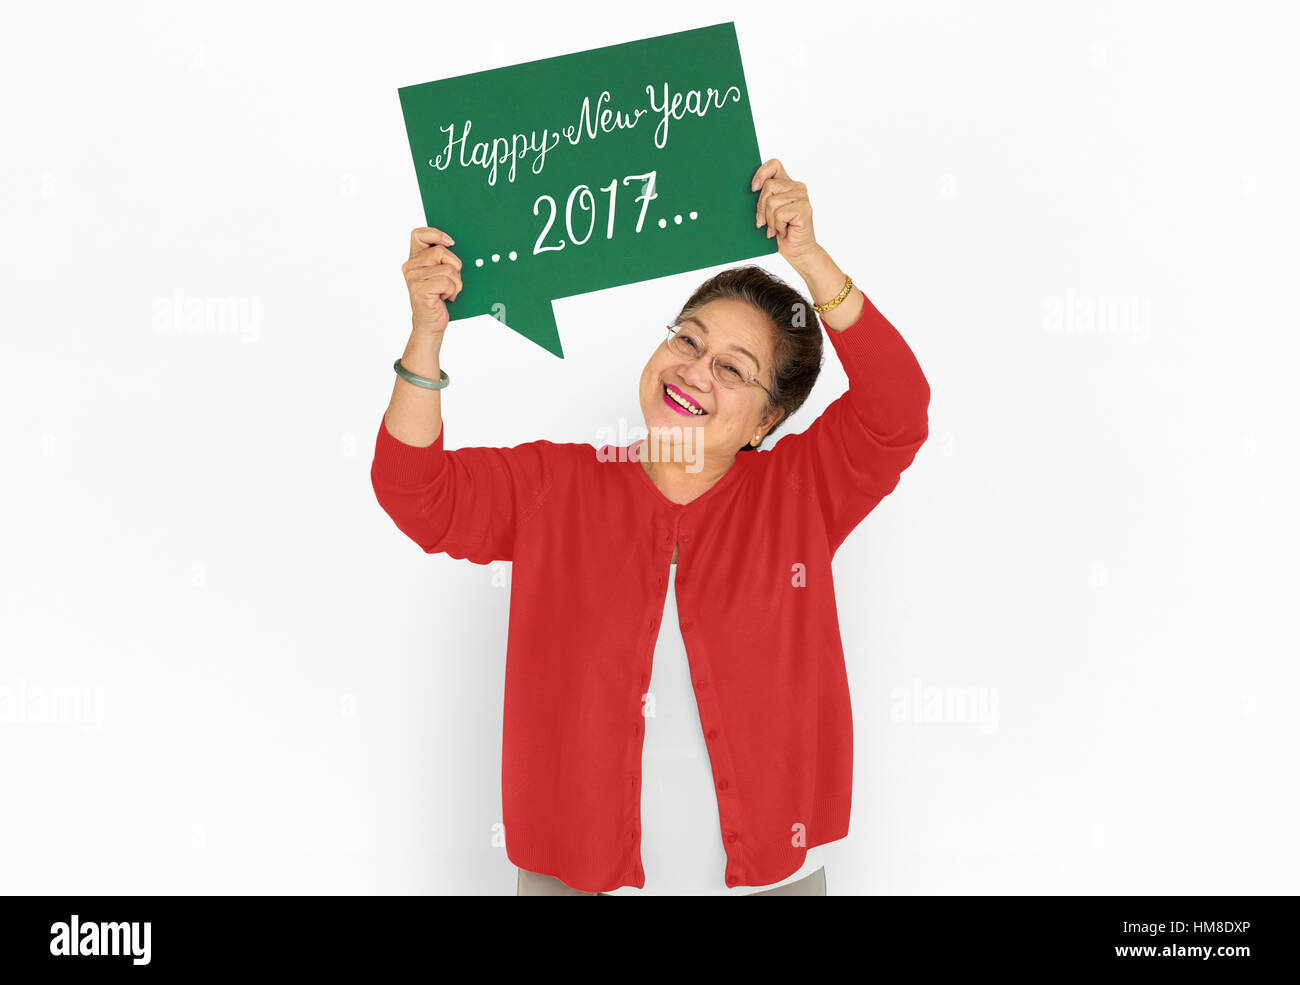 Happy New Year 2017 Concept Stock Photo